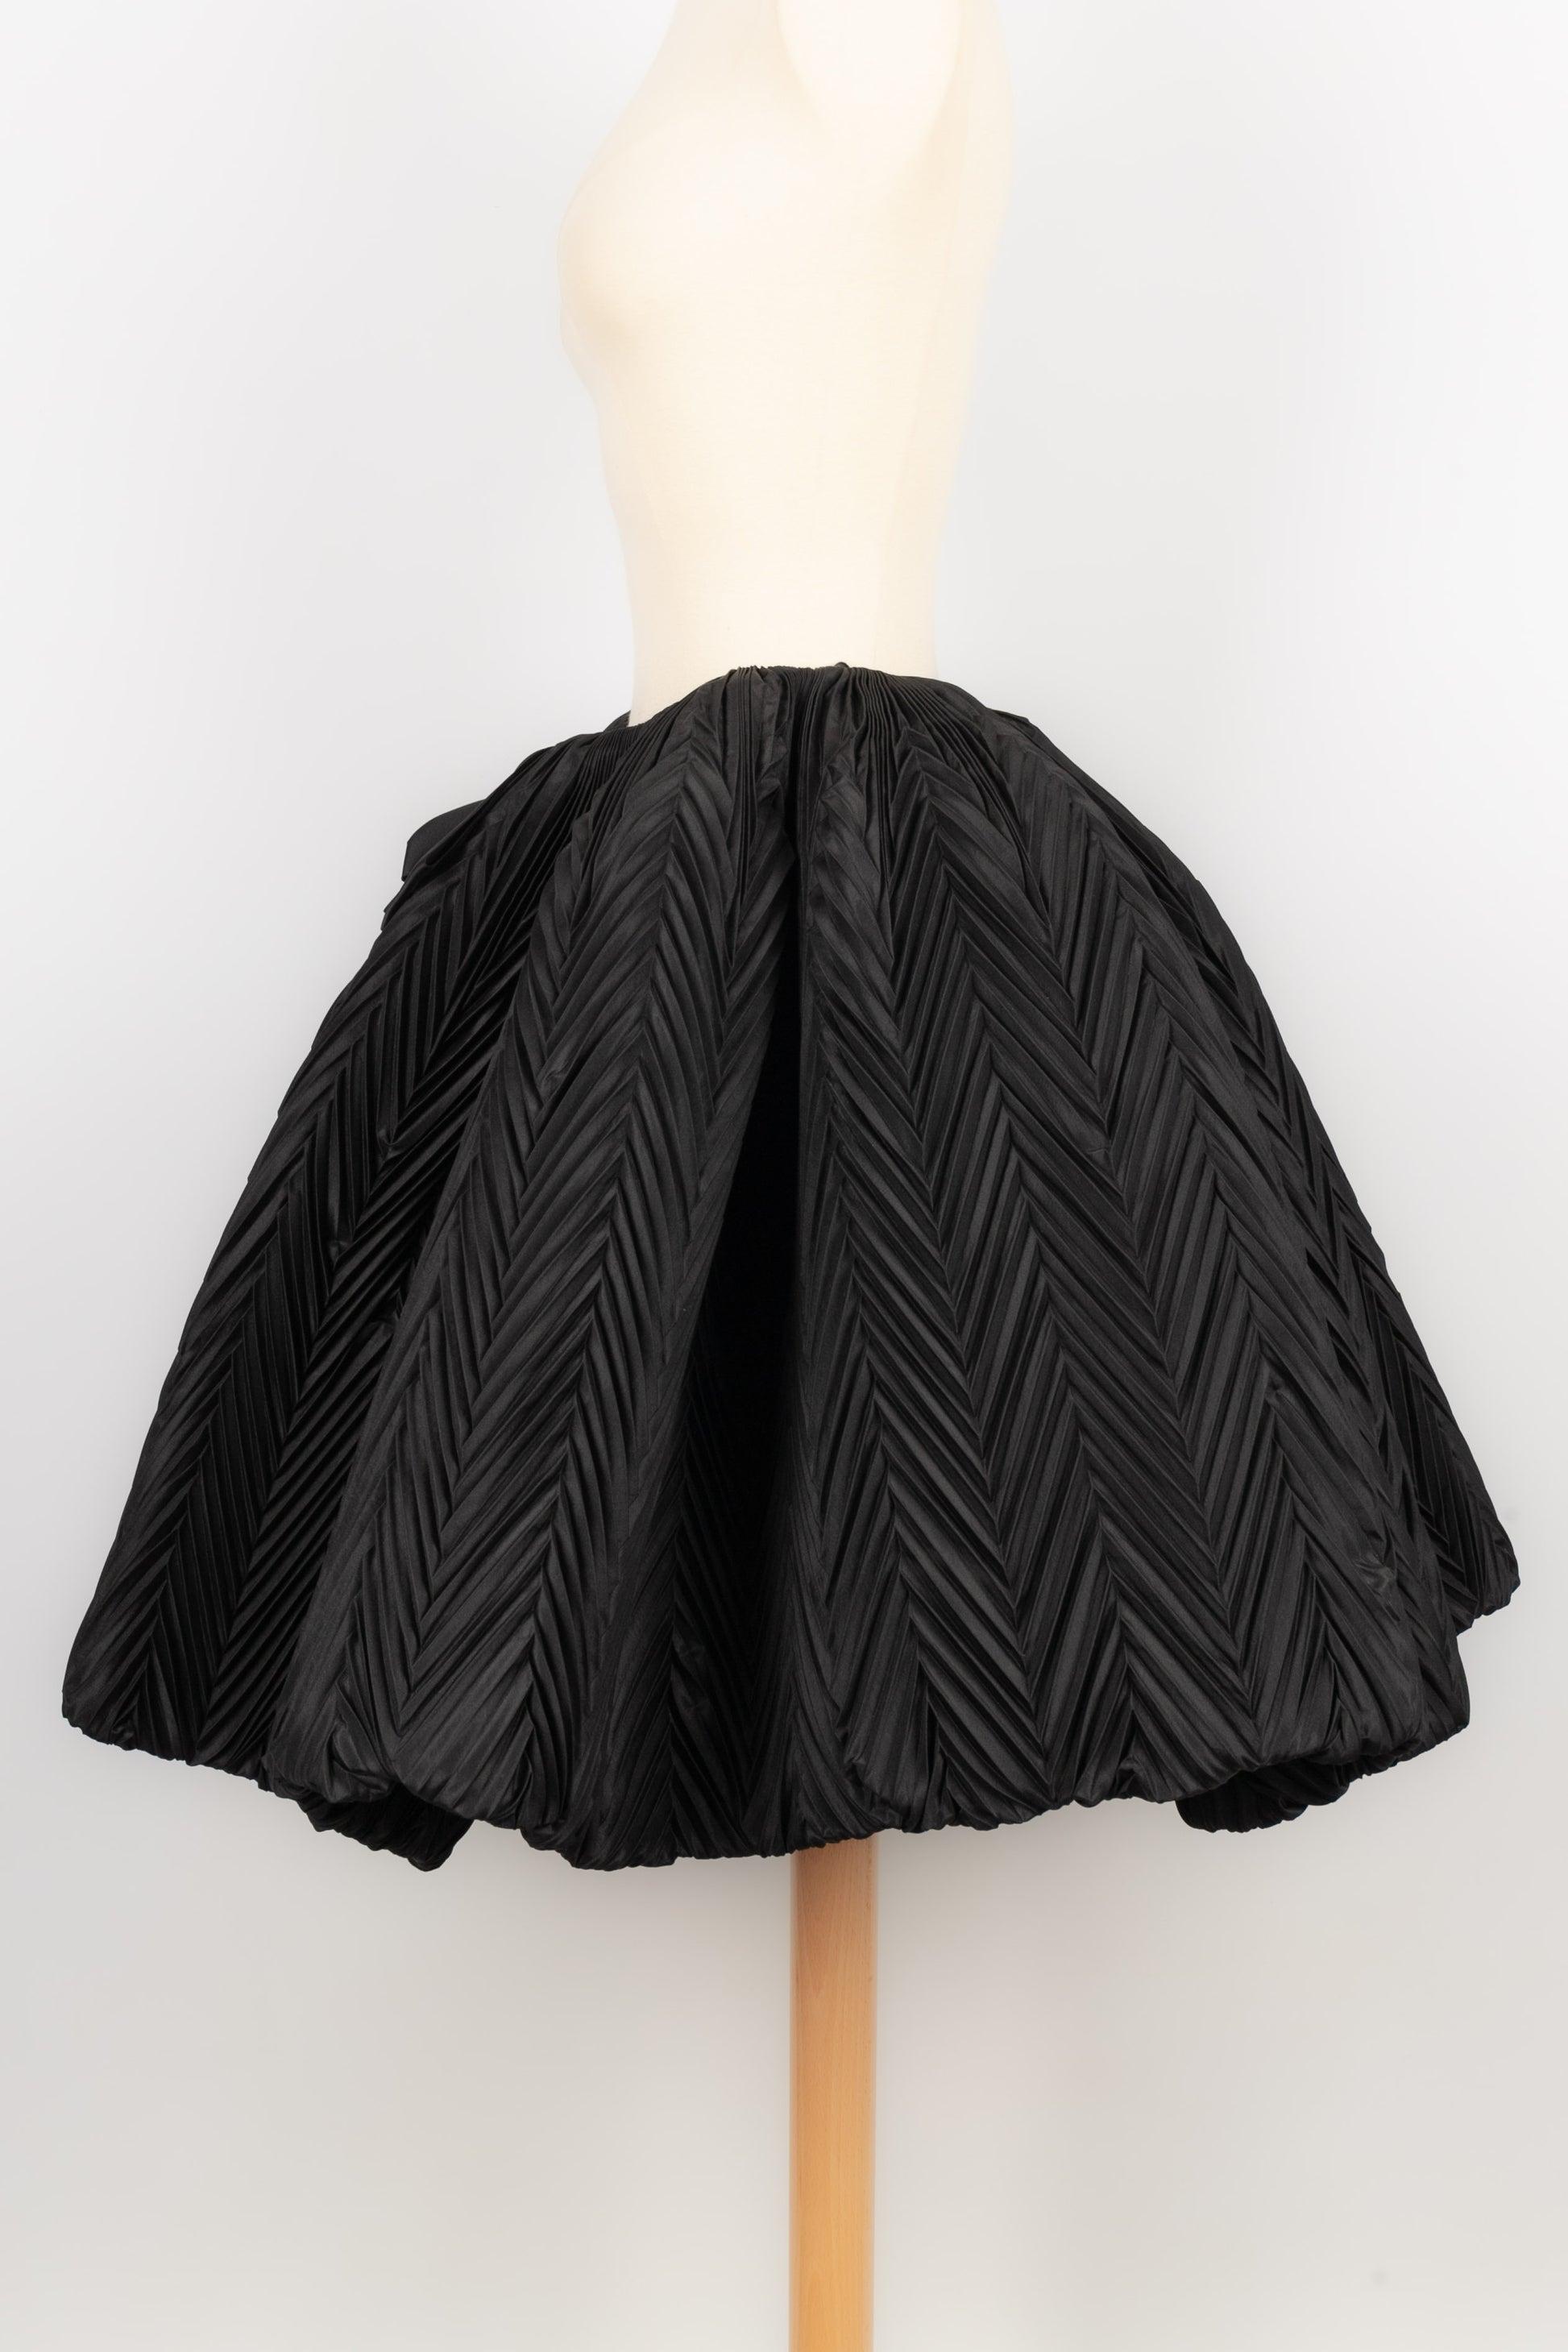 Women's Nina Ricci Haute Couture Circle Skirt Covered with Black Taffeta For Sale